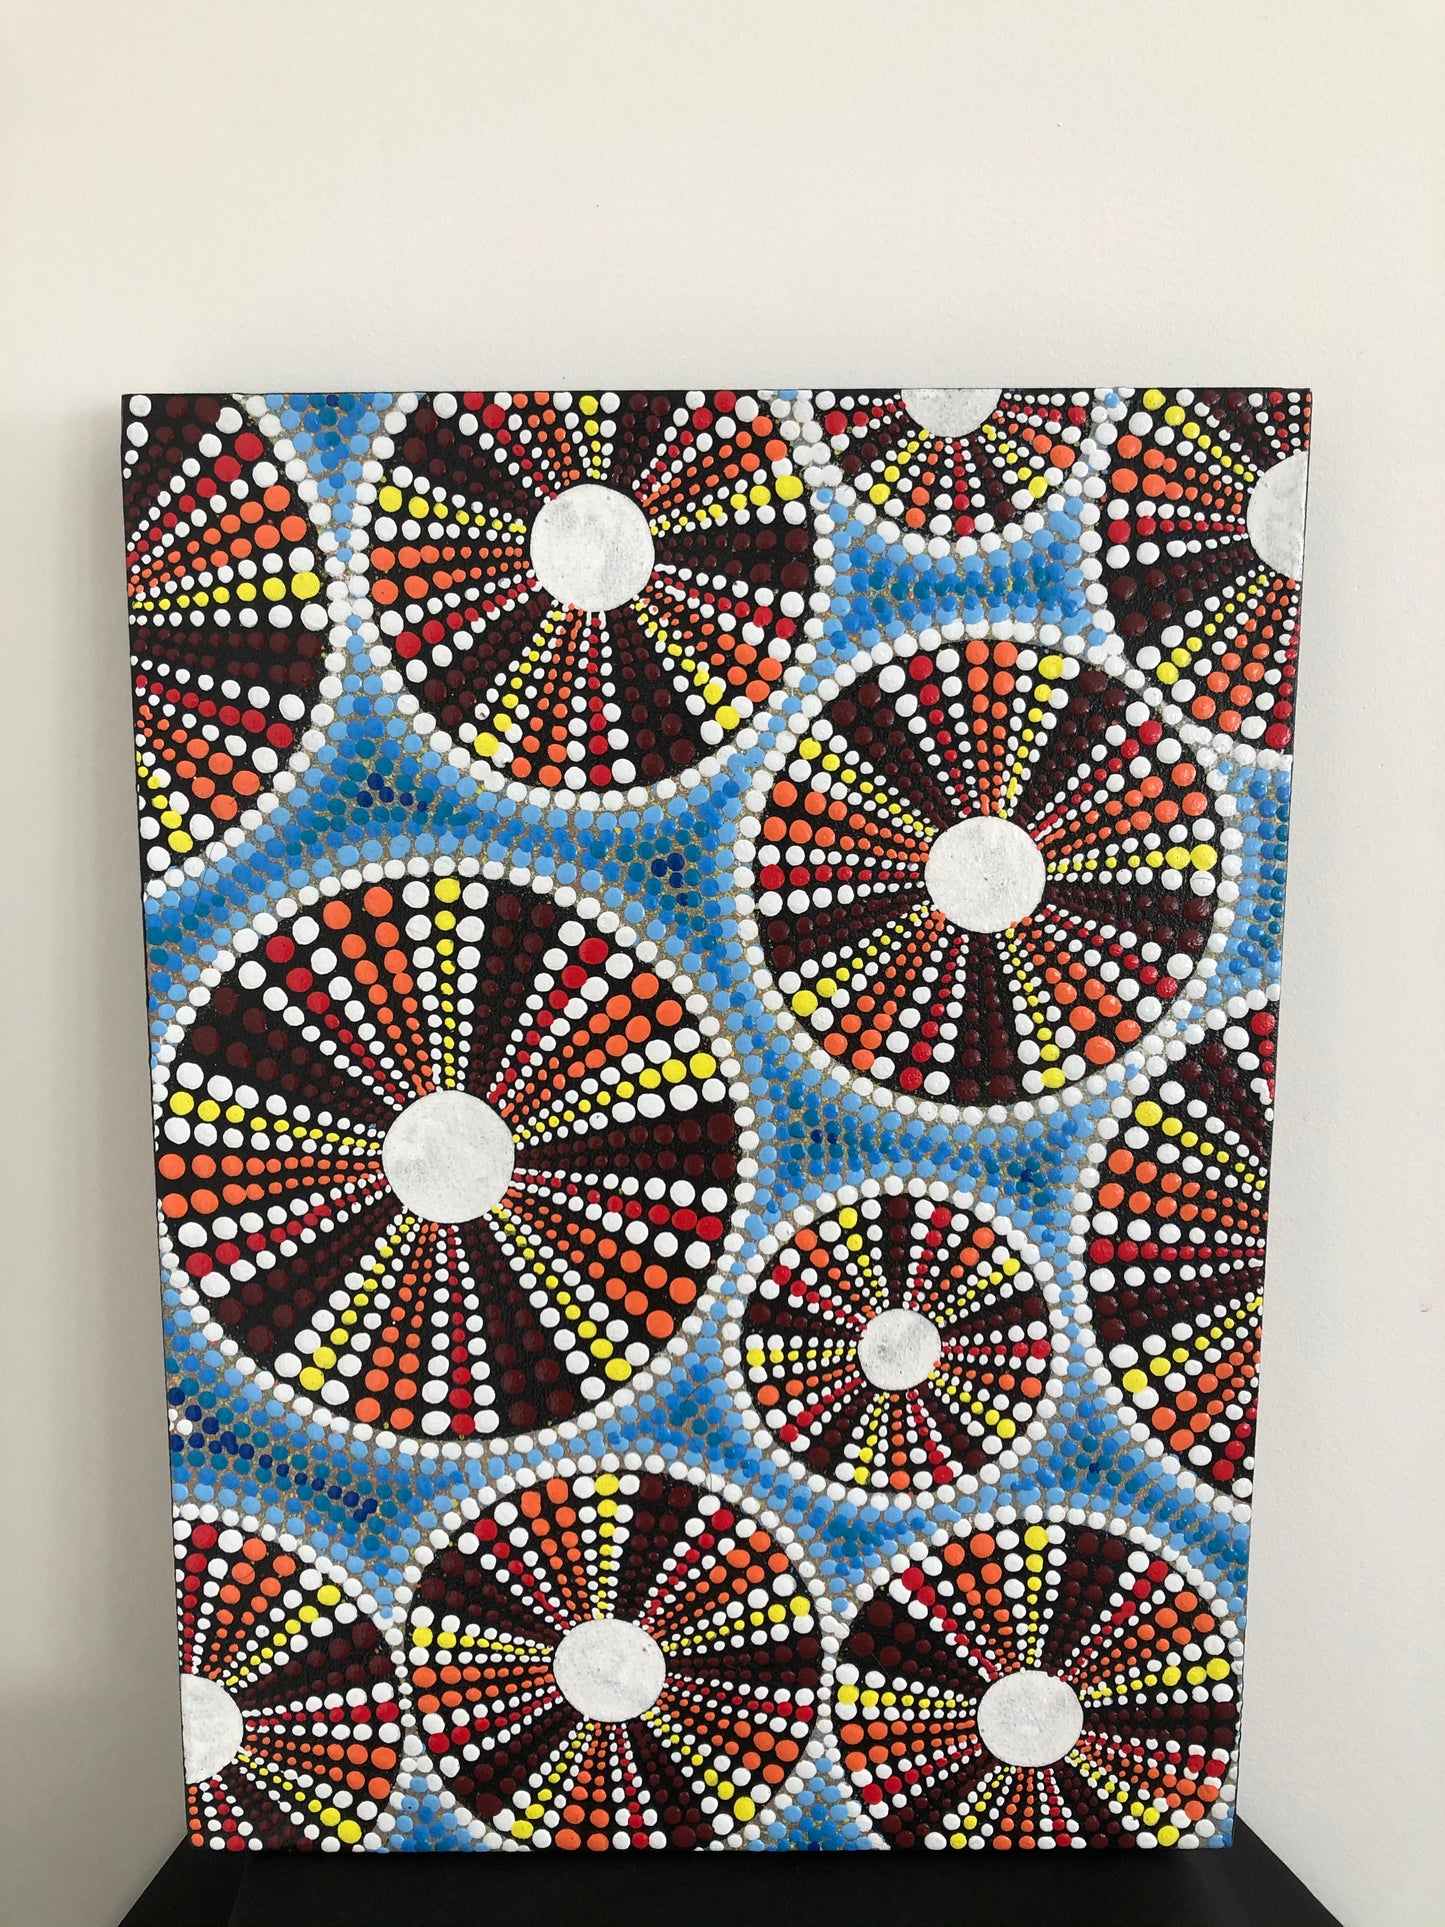 maori artwork features a Kina dot painting on canvas.